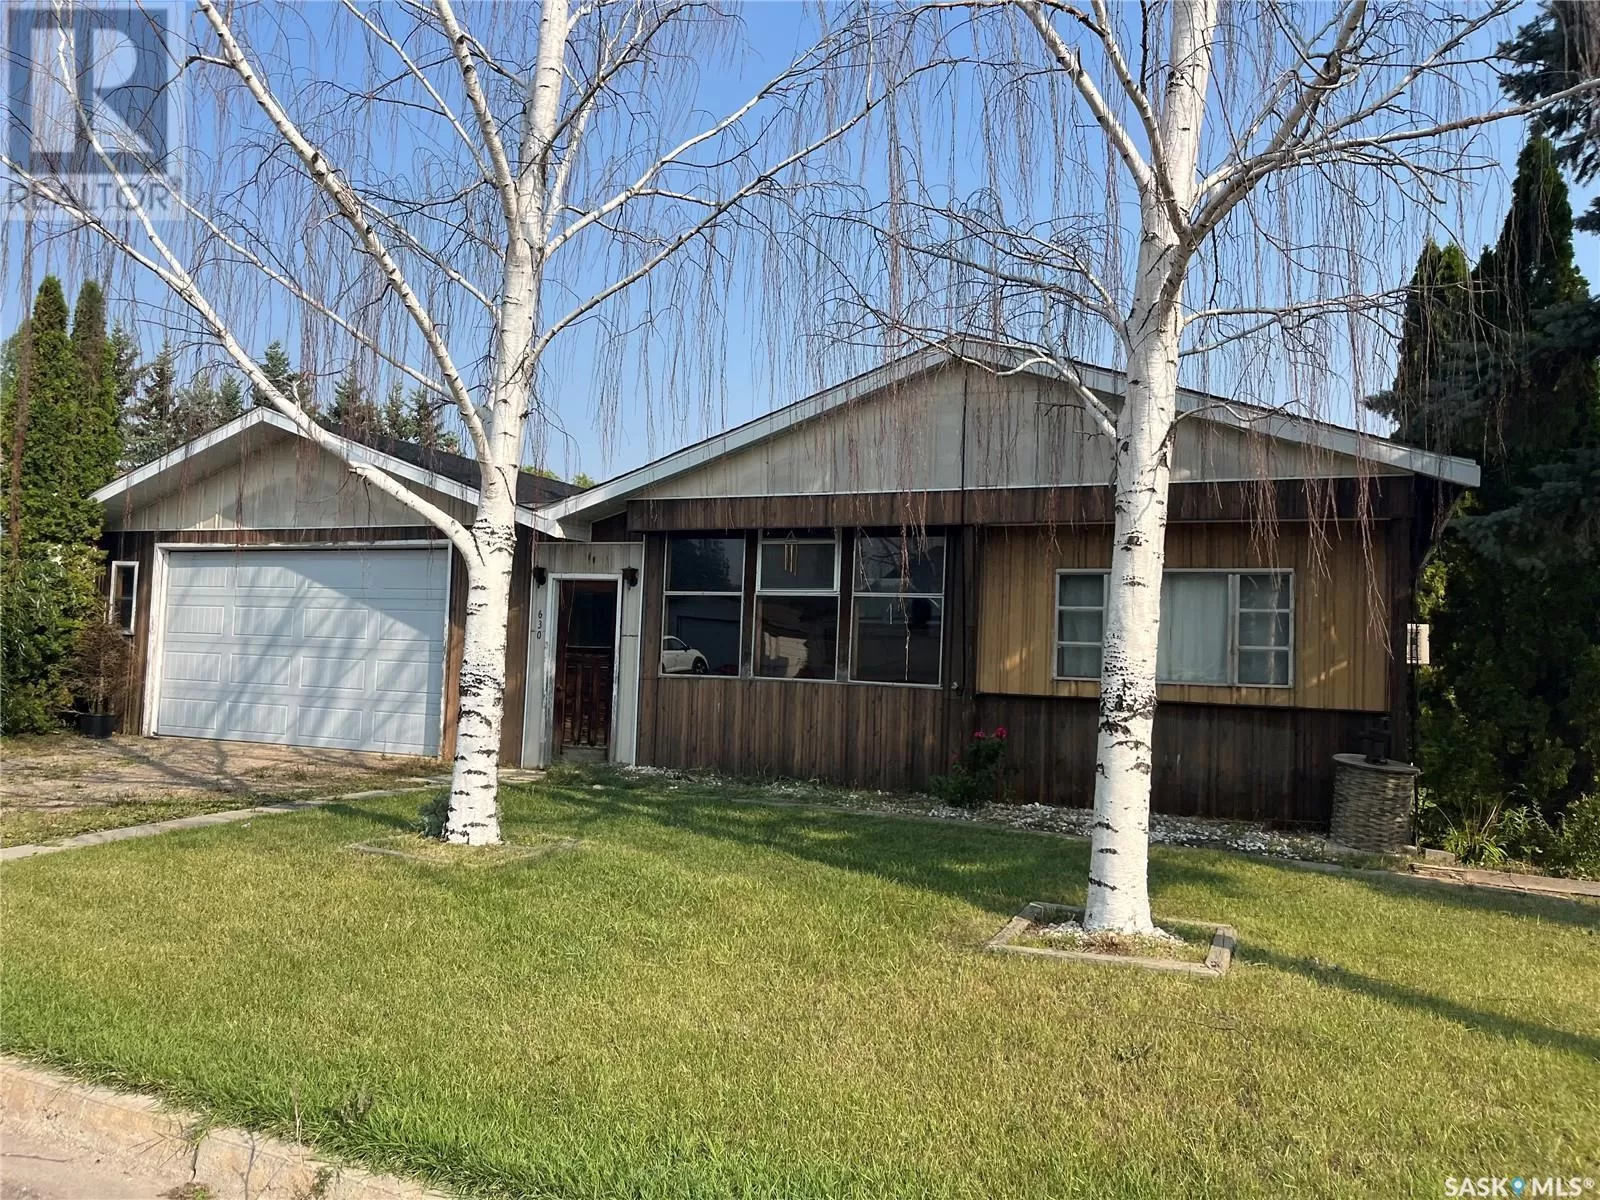 Mobile Home for rent: 630 Little Quill Avenue, Wynyard, Saskatchewan S0A 4T0